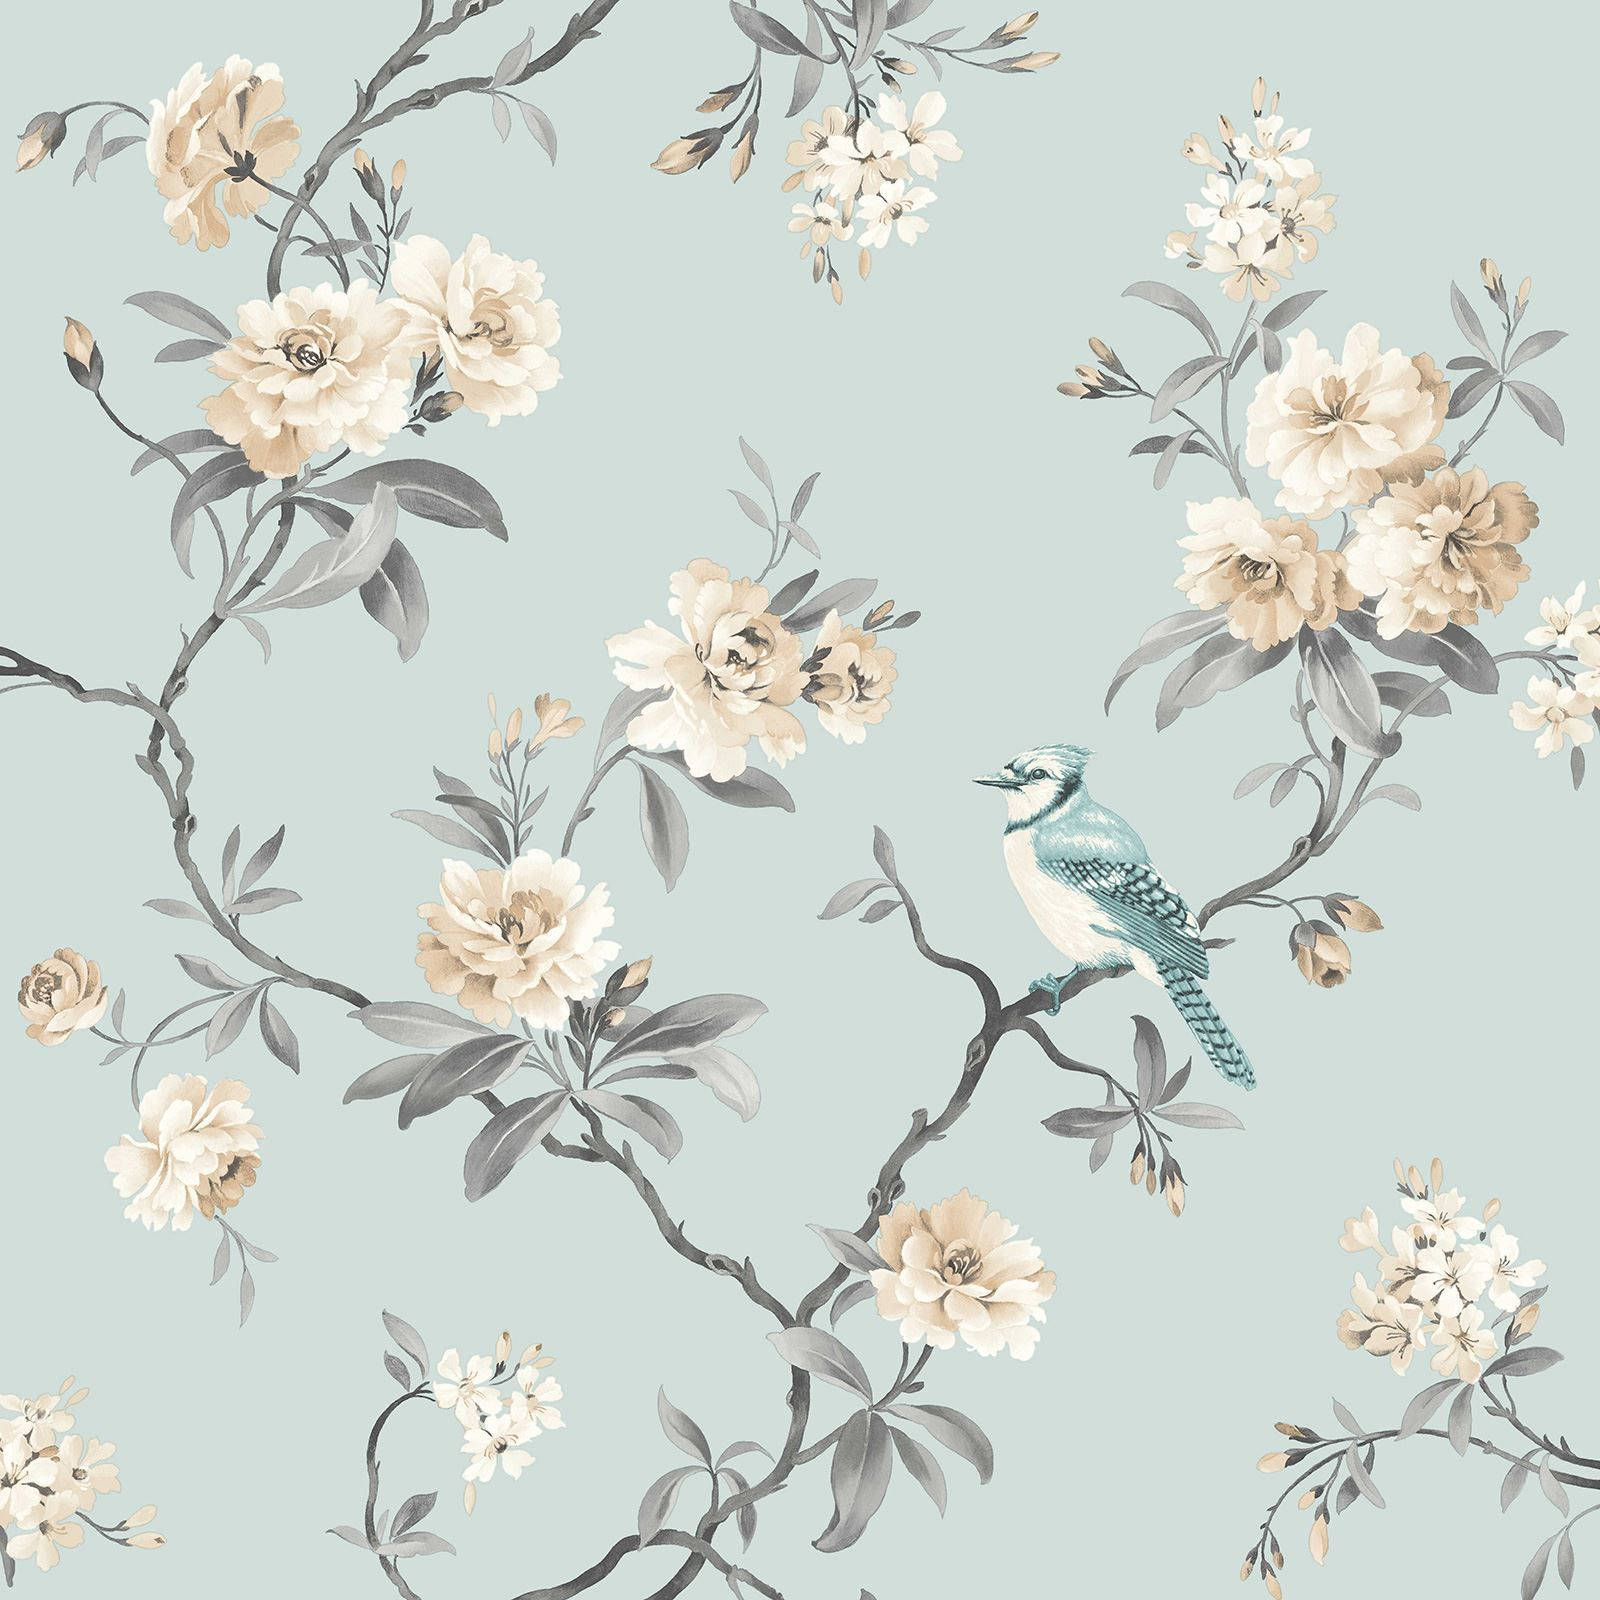 Enjoy Nature's Beauty - Blue Bird Among Floral Delights Wallpaper